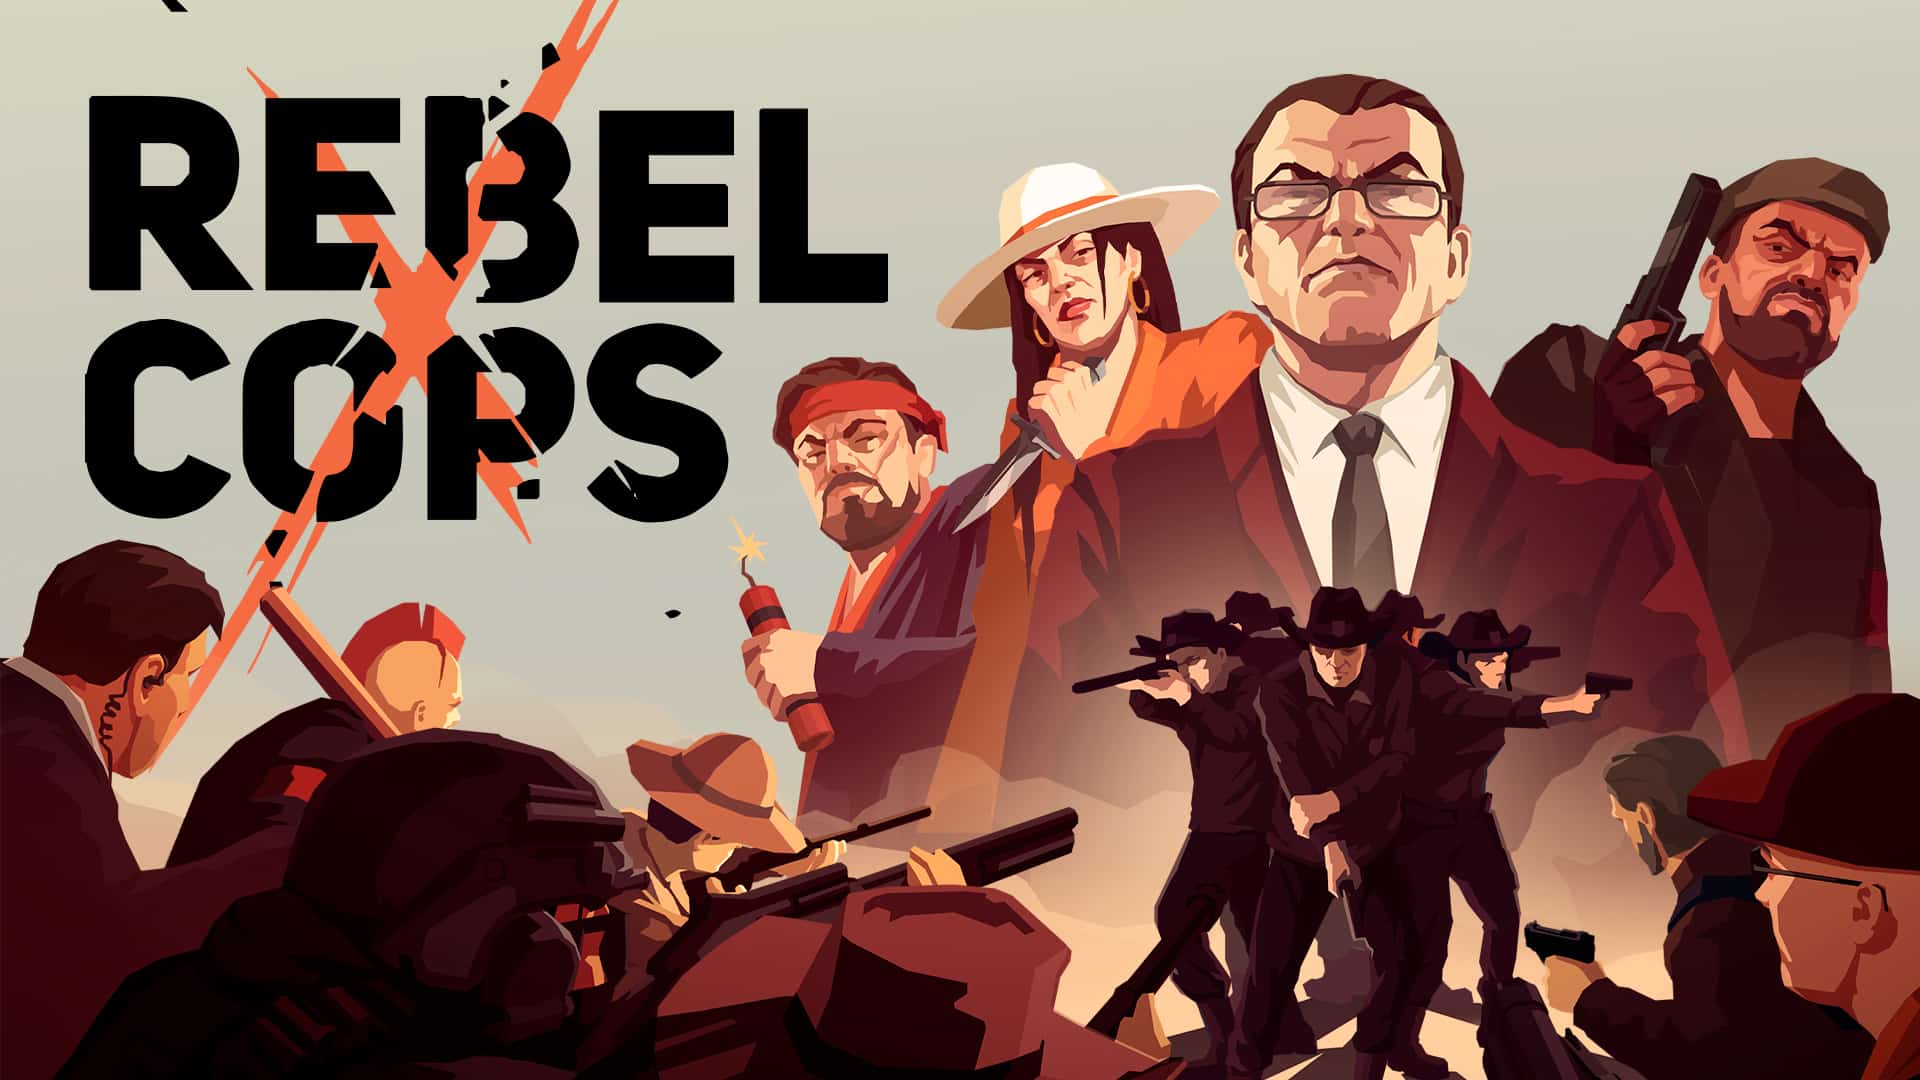 Rebel cops chega gritando ao mobile | 2eeb1ced 0265 4921 bbf1 039ab1a82e26 | married games deepnight games | deepnight games | rebel cops